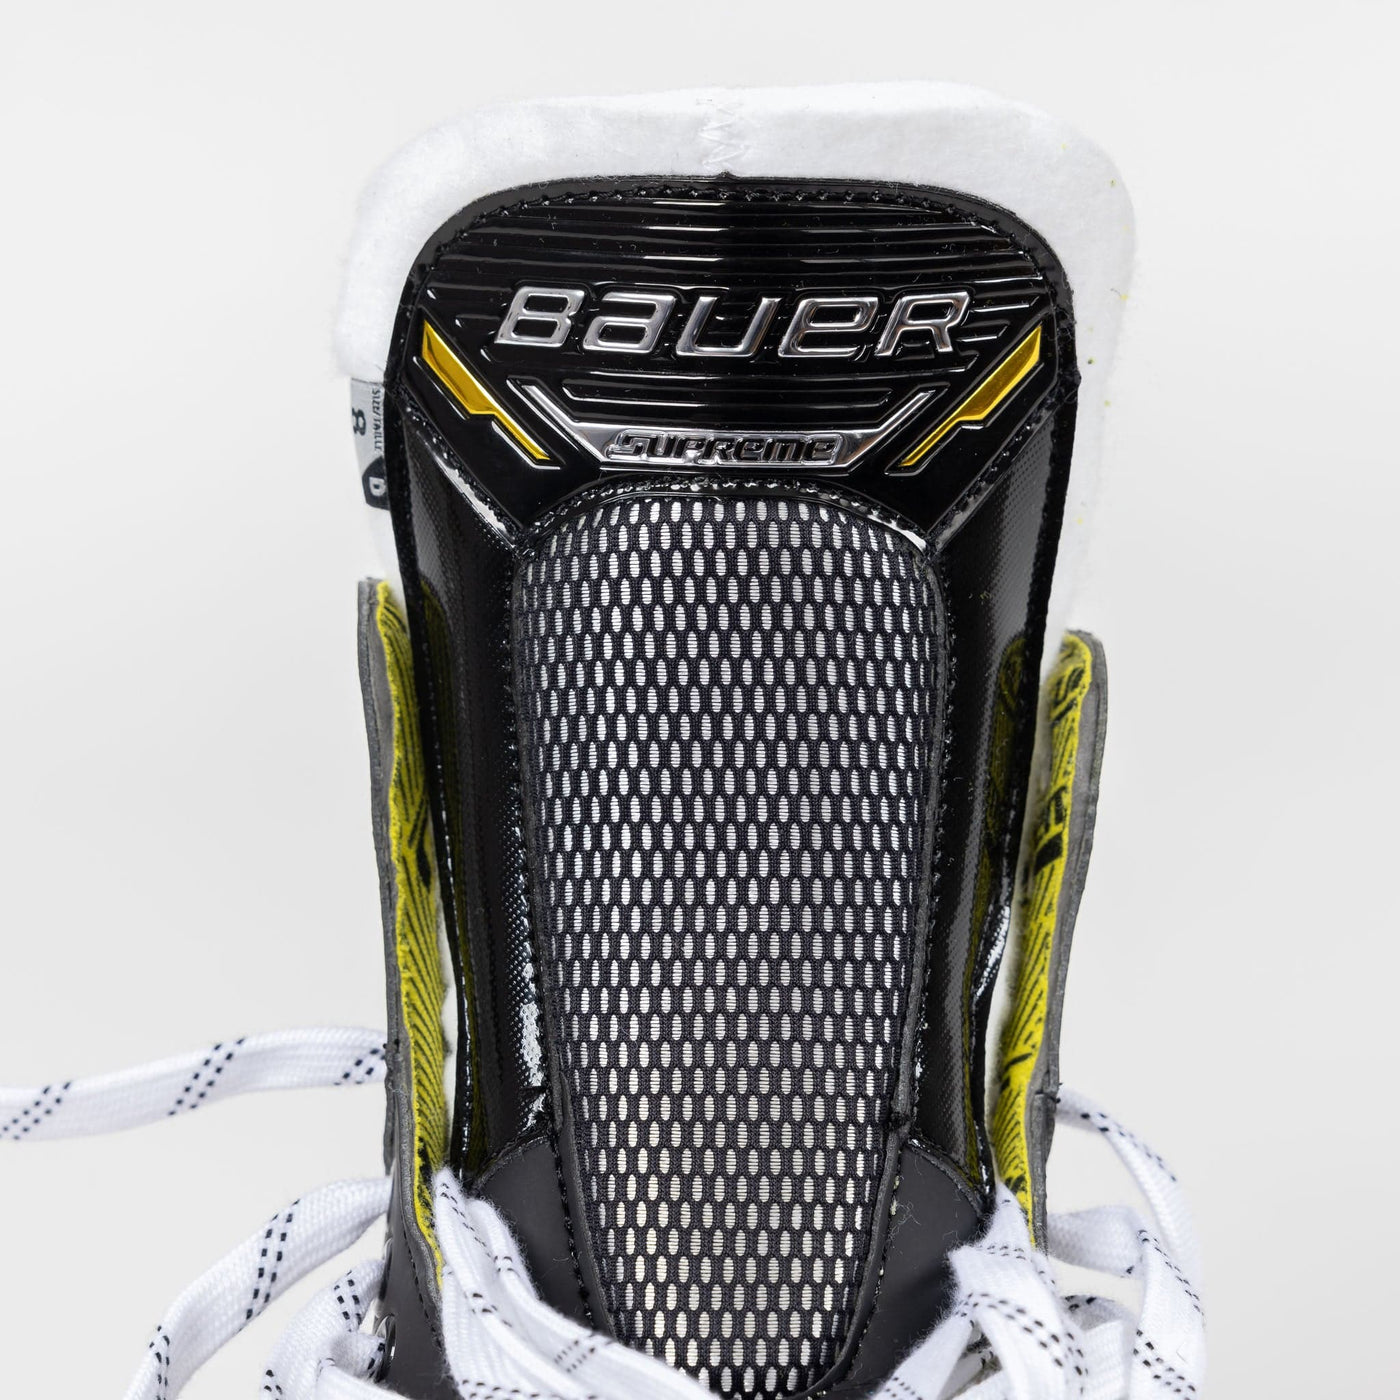 Bauer Supreme Elite Intermediate Hockey Skates - The Hockey Shop Source For Sports